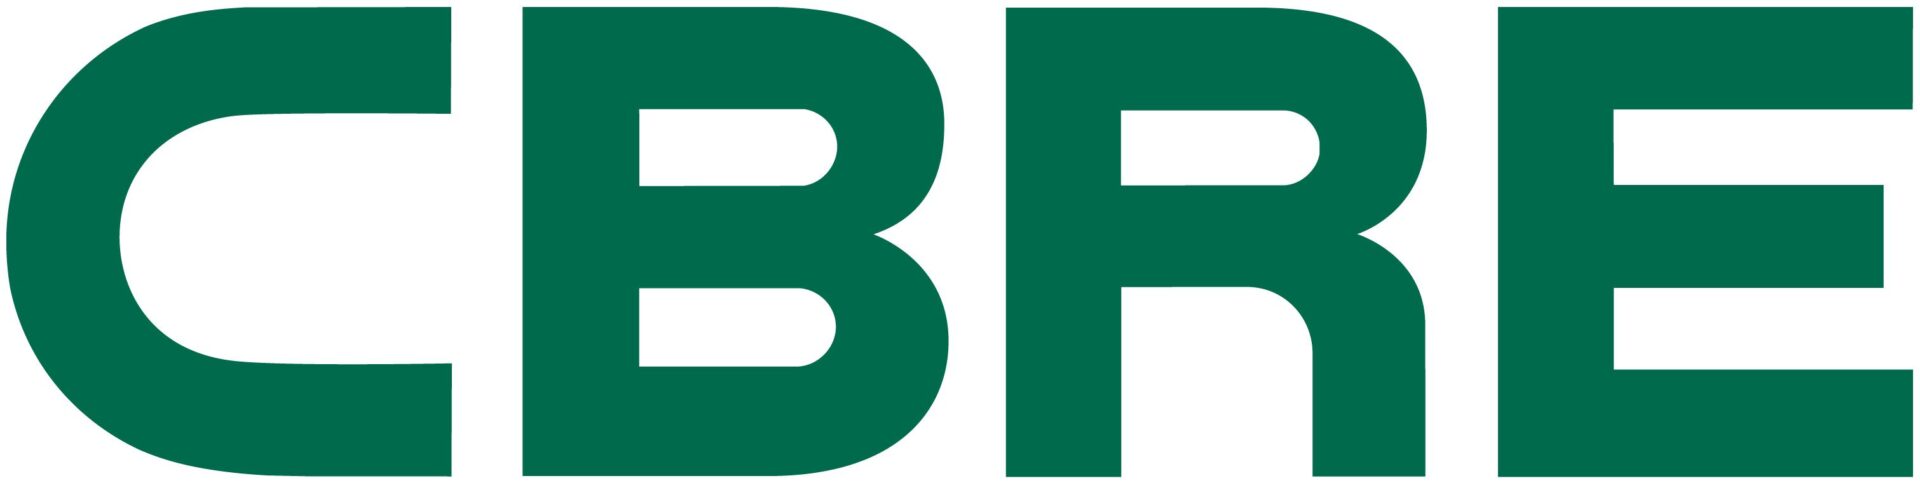 A green logo of the company bp.